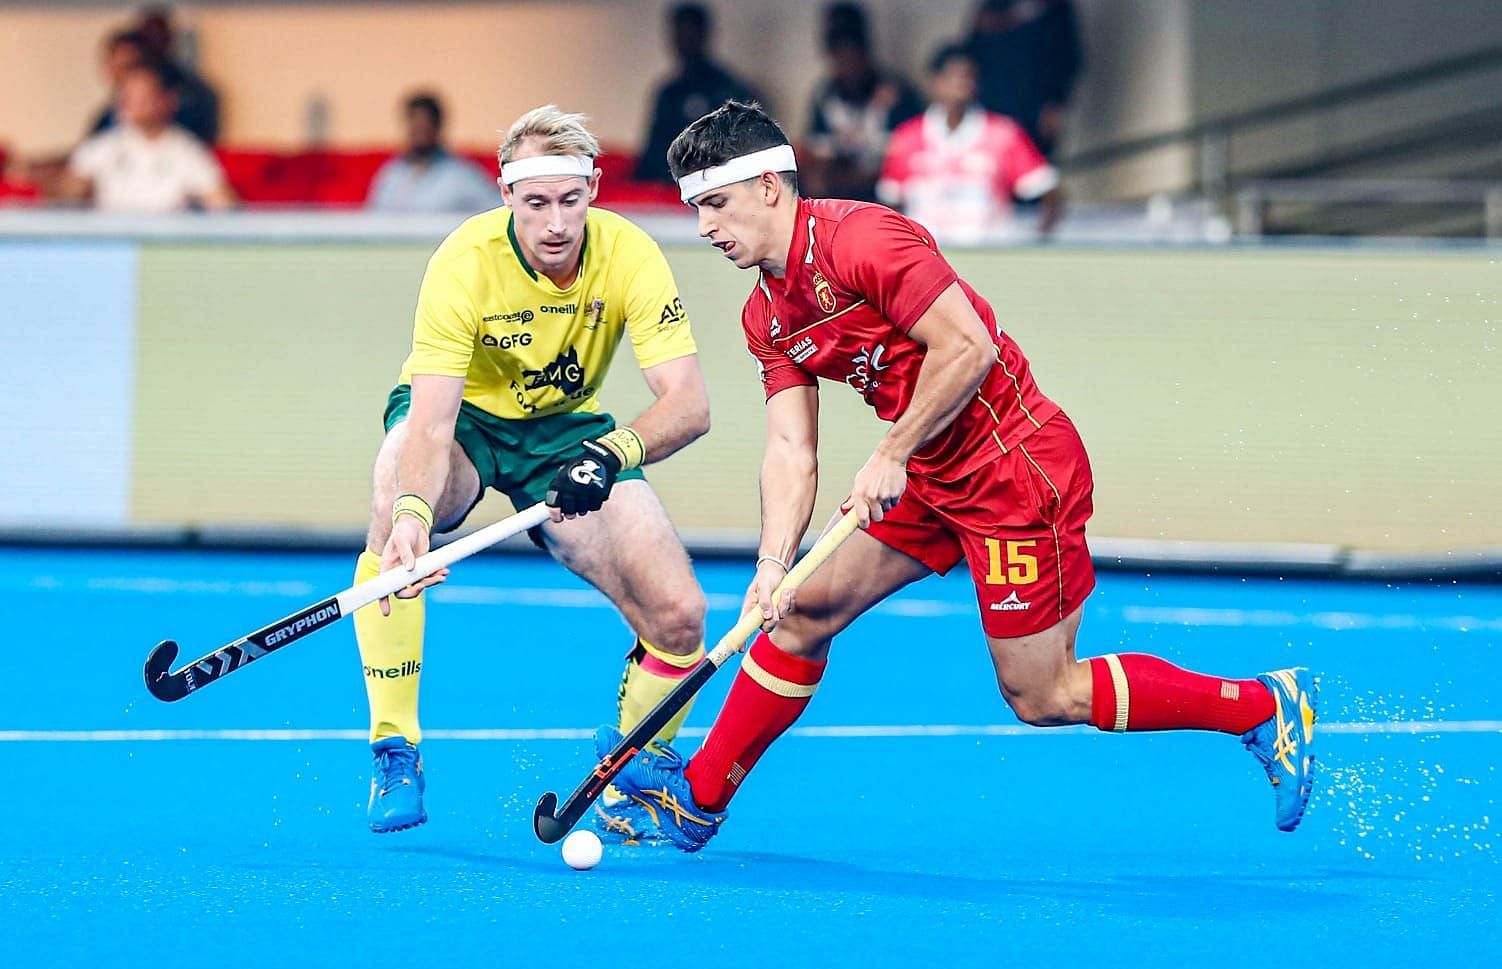 Spain battled hard but failed to stop the Australians   Image Ctsy: Hockey India